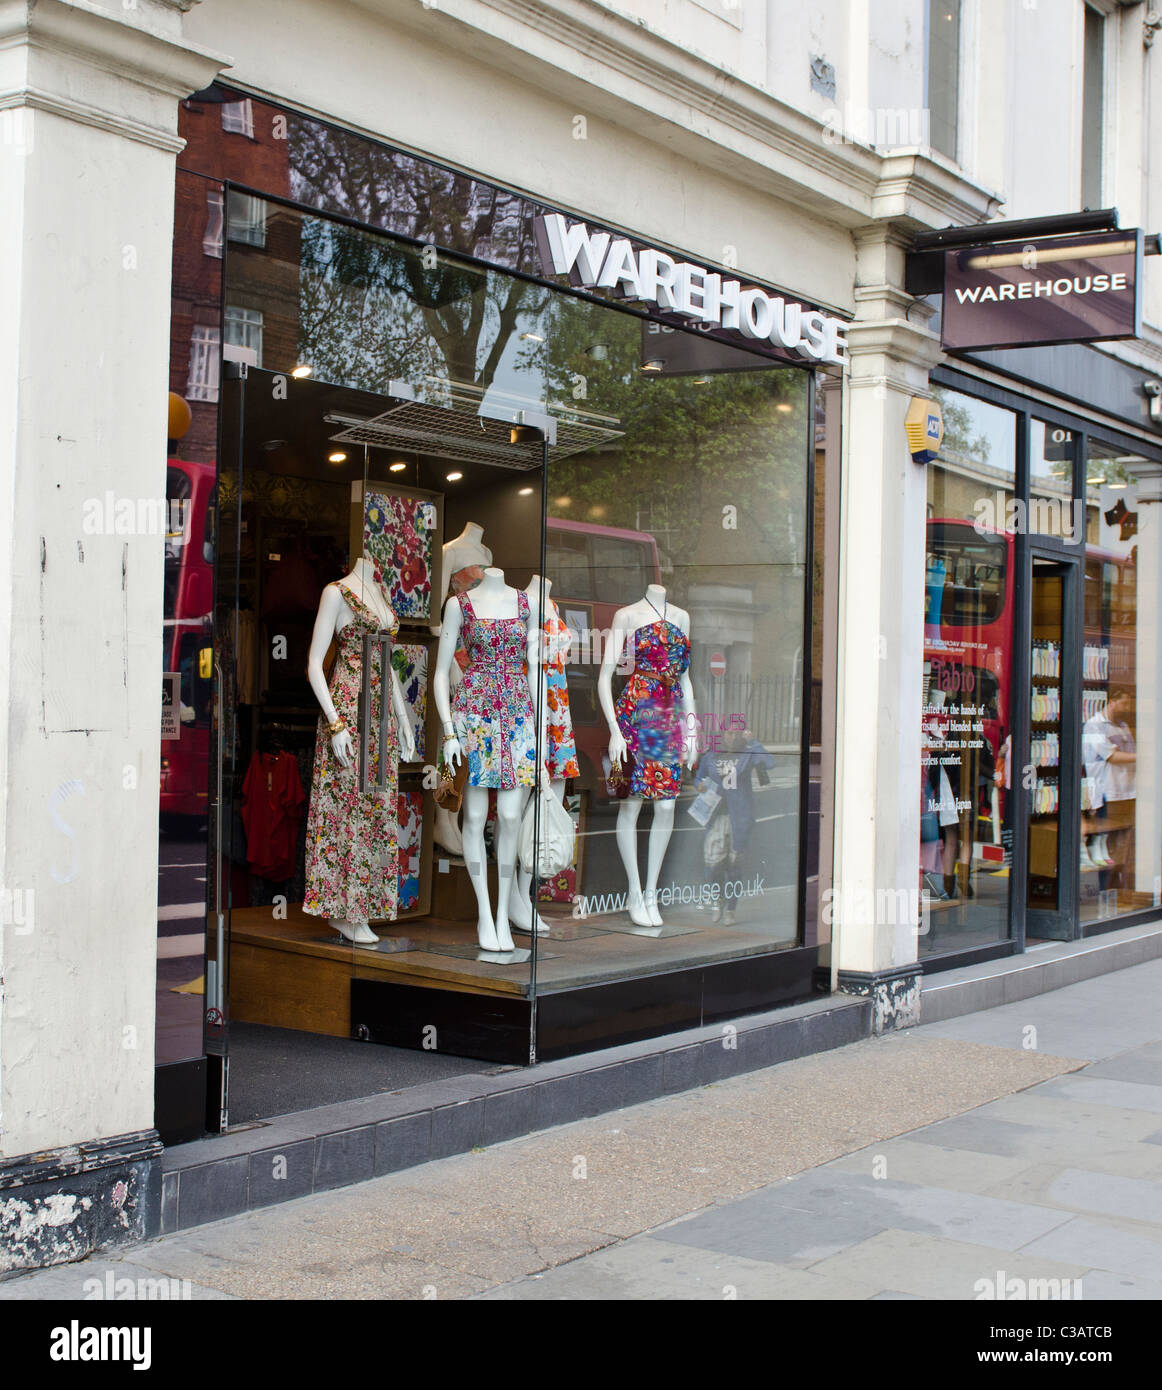 Warehouse retail moda mujer tienda ropa King's Road, Chelsea London UK Kate  Middleton visto comprando ropa en la tienda Fotografía de stock - Alamy